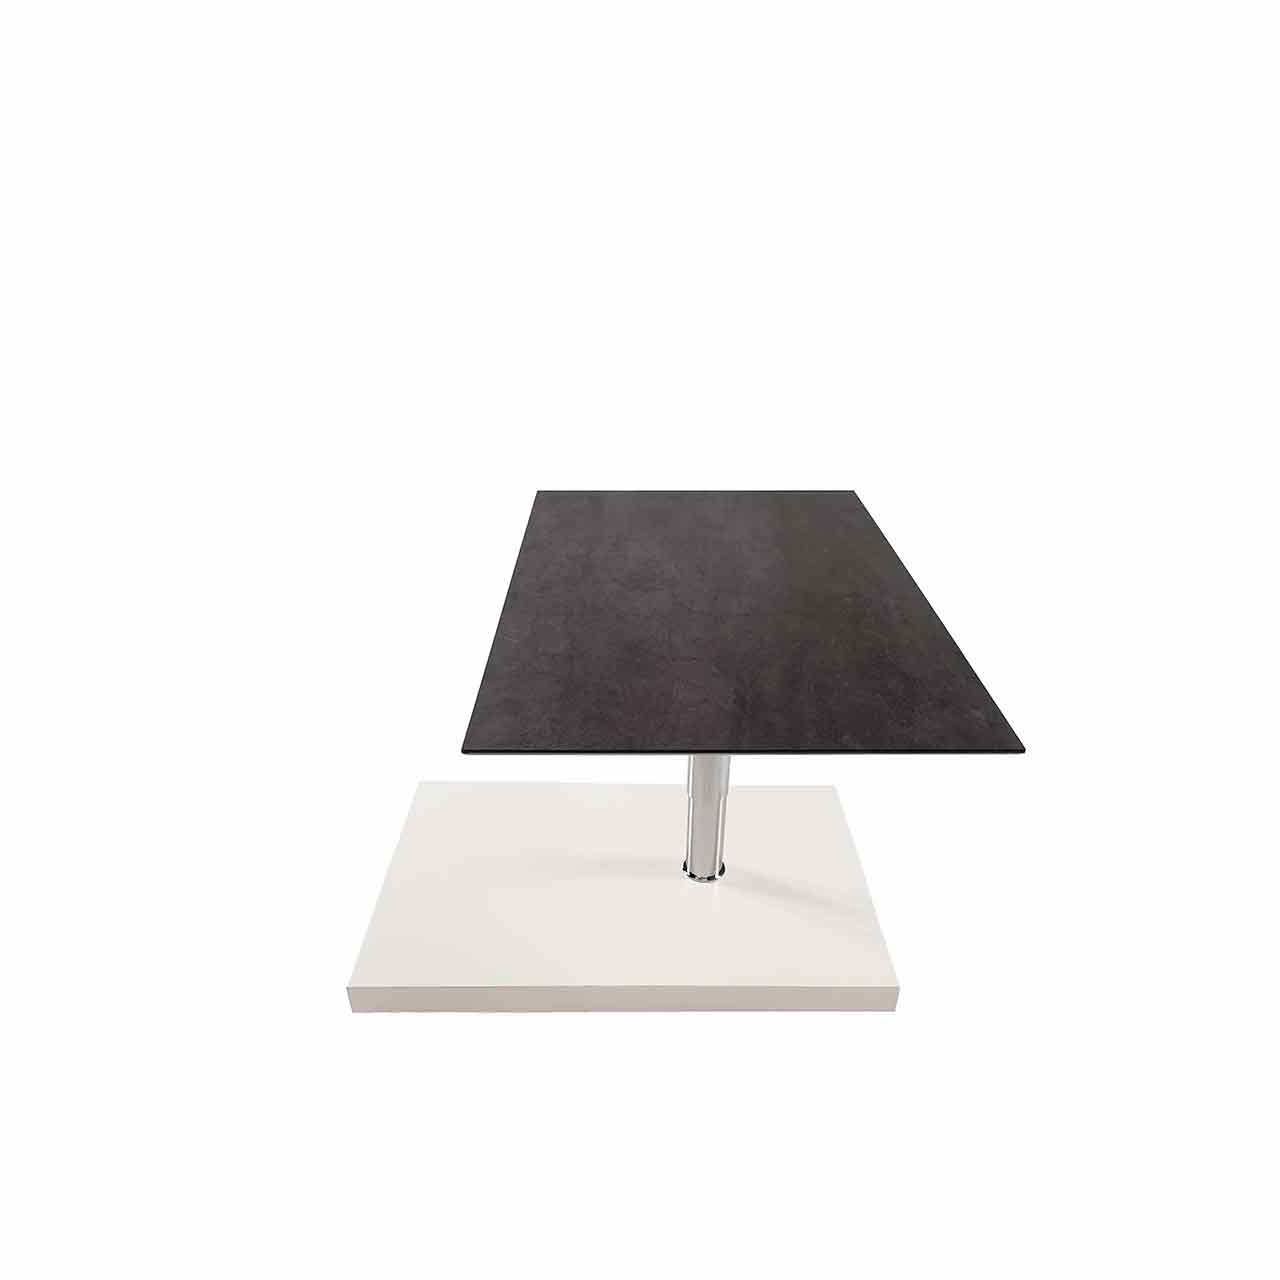 Ronald Schmitt – Couchtisch Wing K 773 | Tischplatte Keramik Anthrazit, Tischplatte gedreht